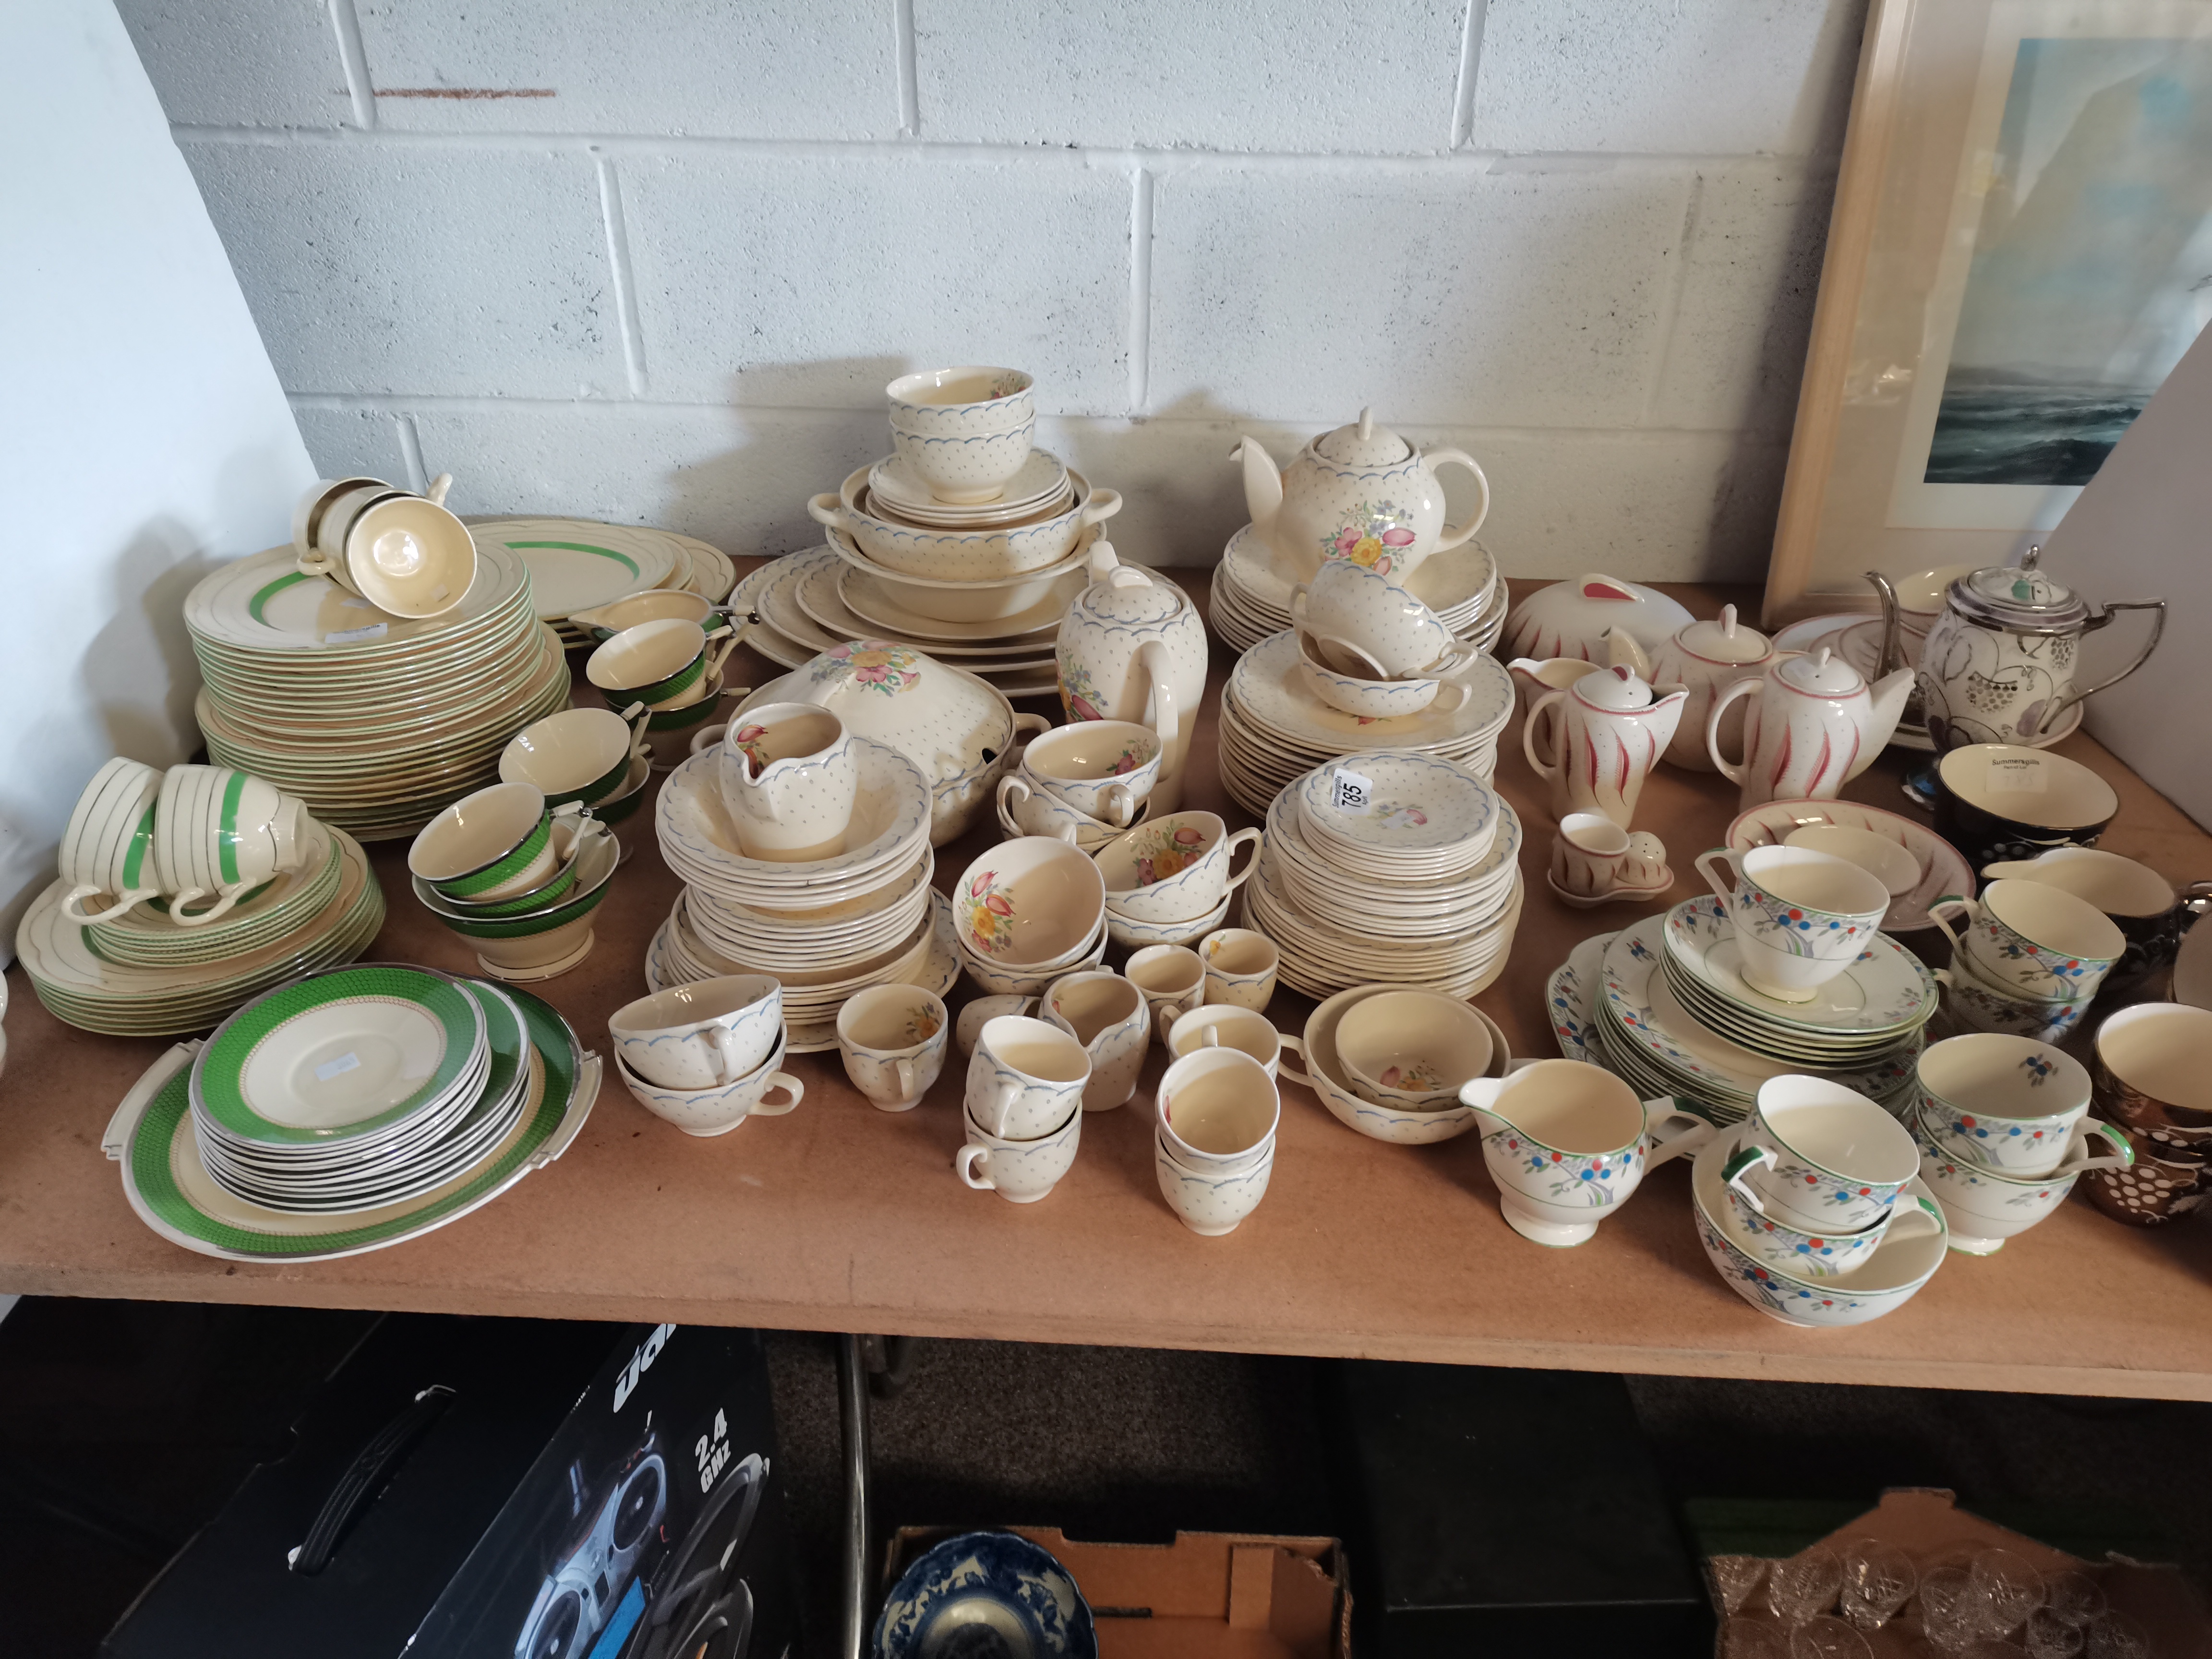 Large quantity of retro / vintage tea sets - Susie Cooper, Wedgwood, Pink Fern etc